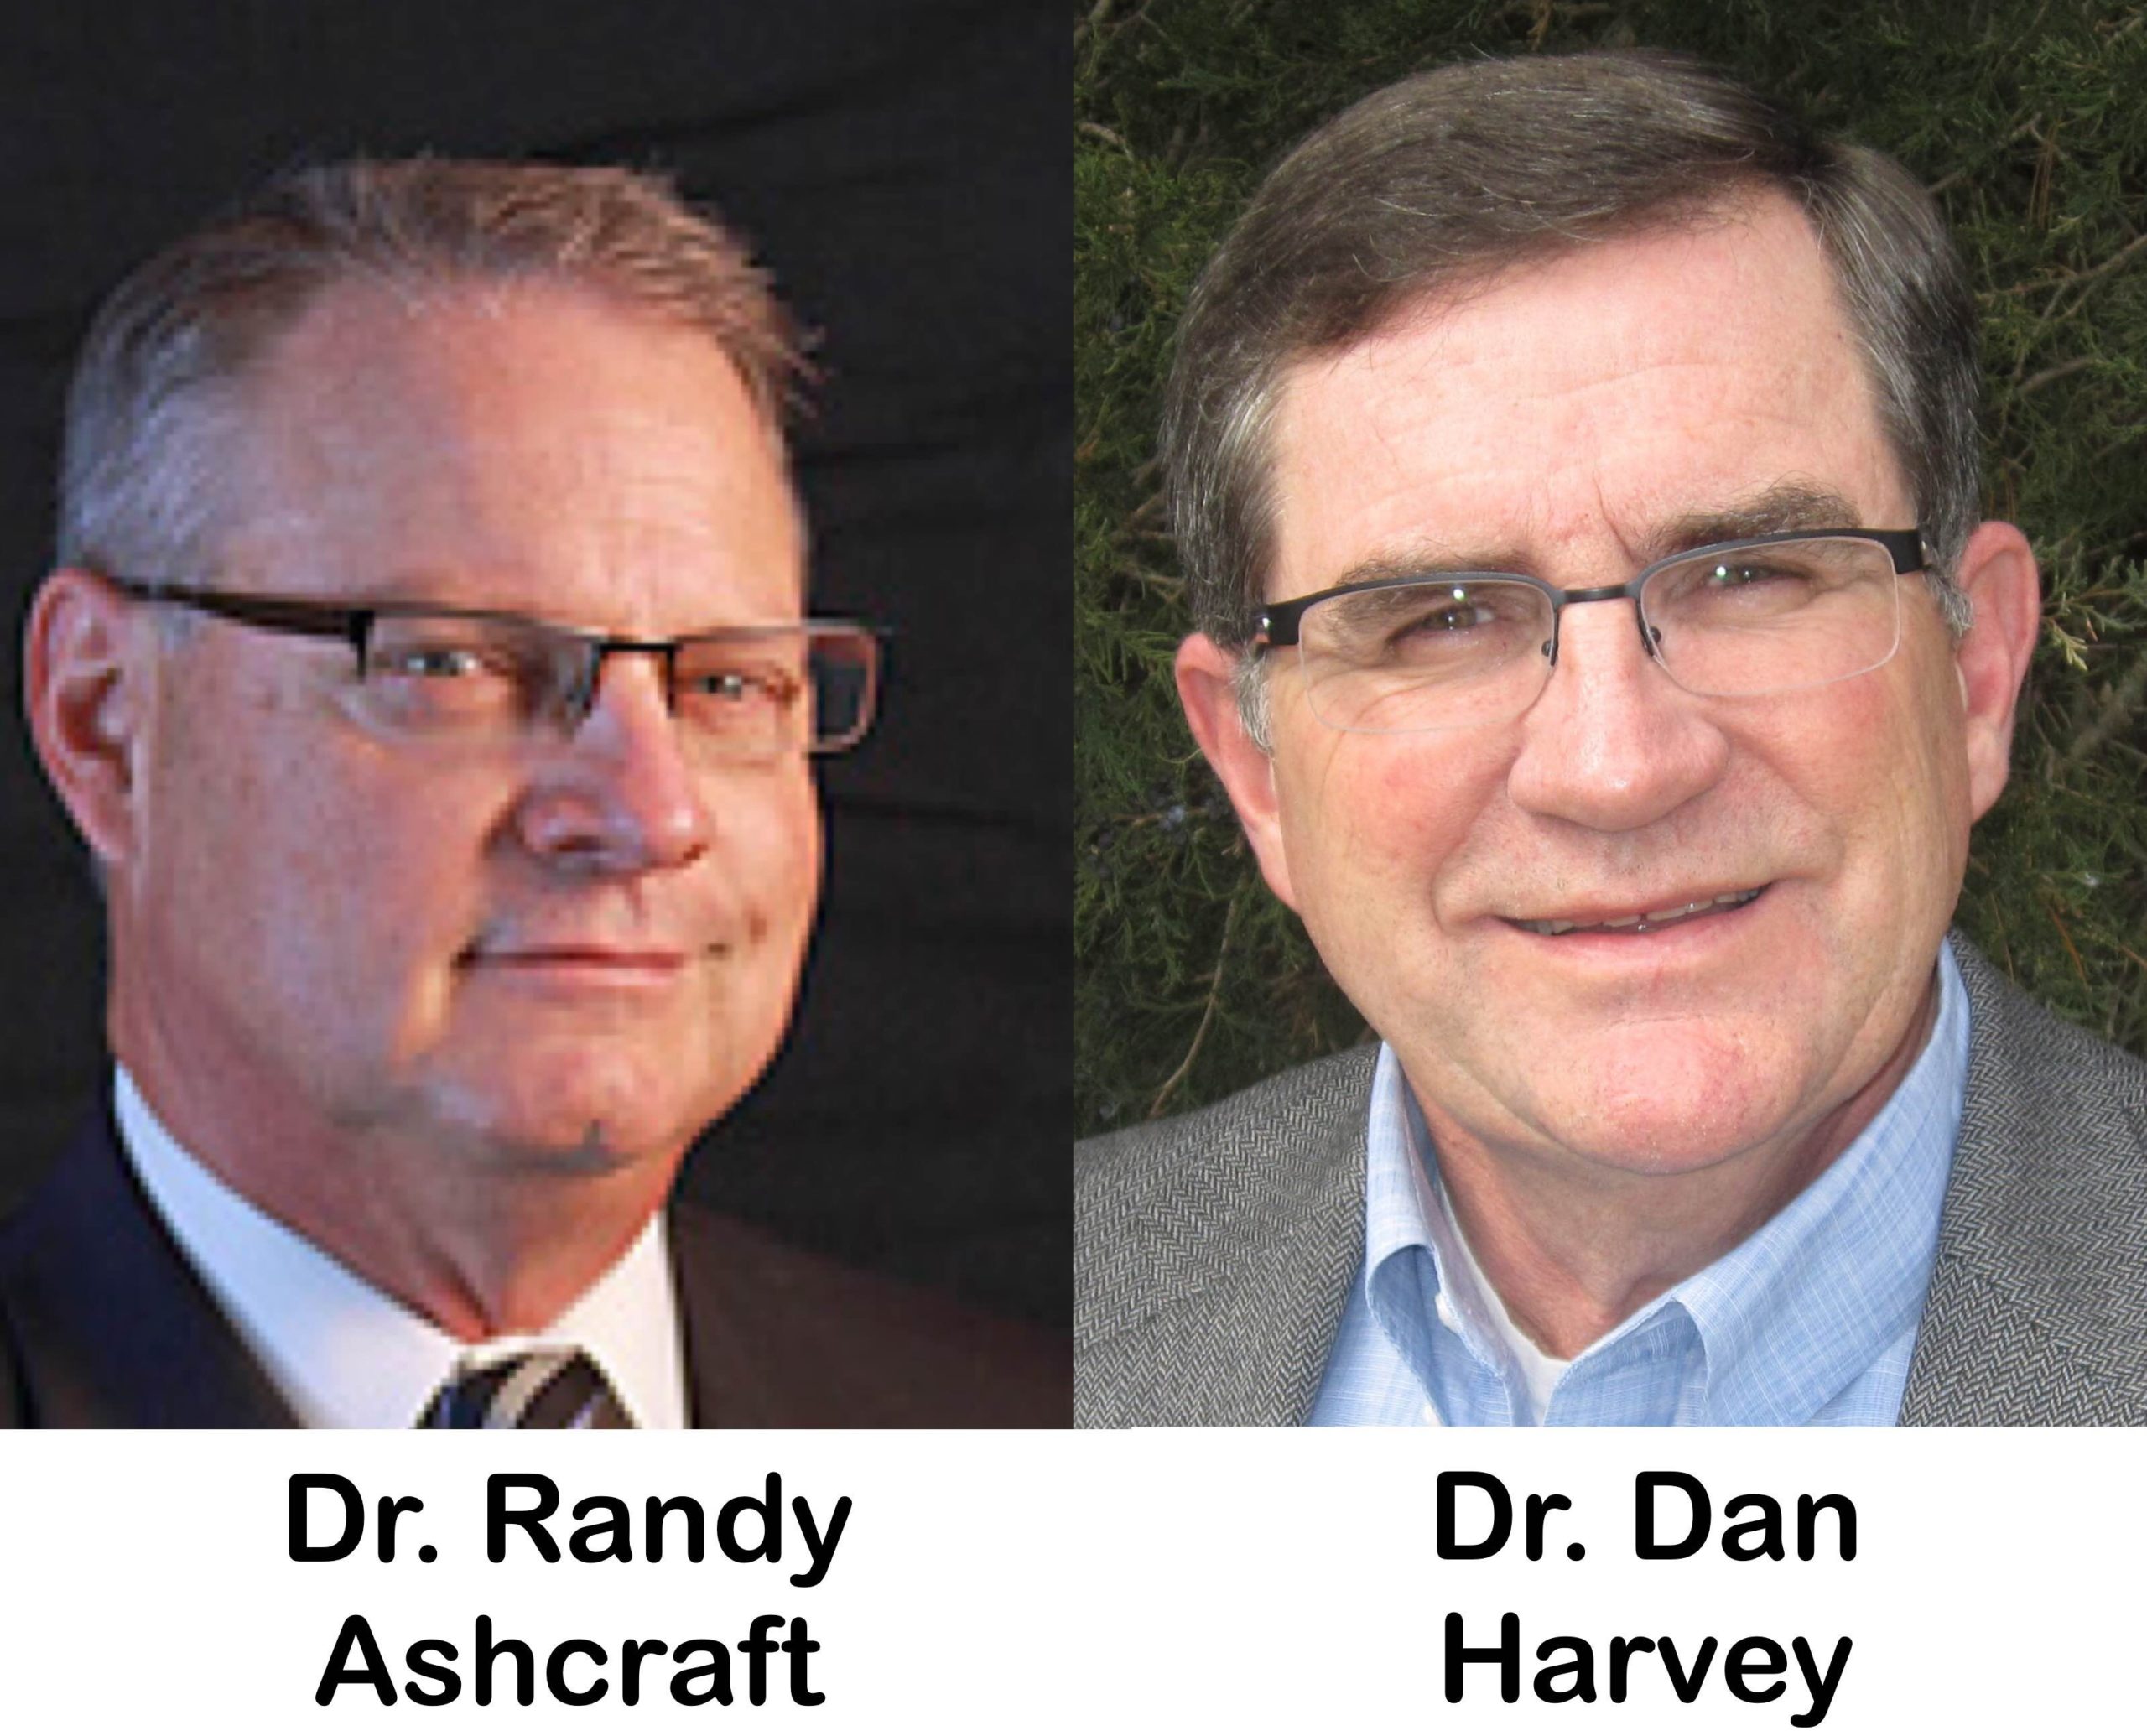 Dr. Randy Ashcraft and Dr. Dan Harvey